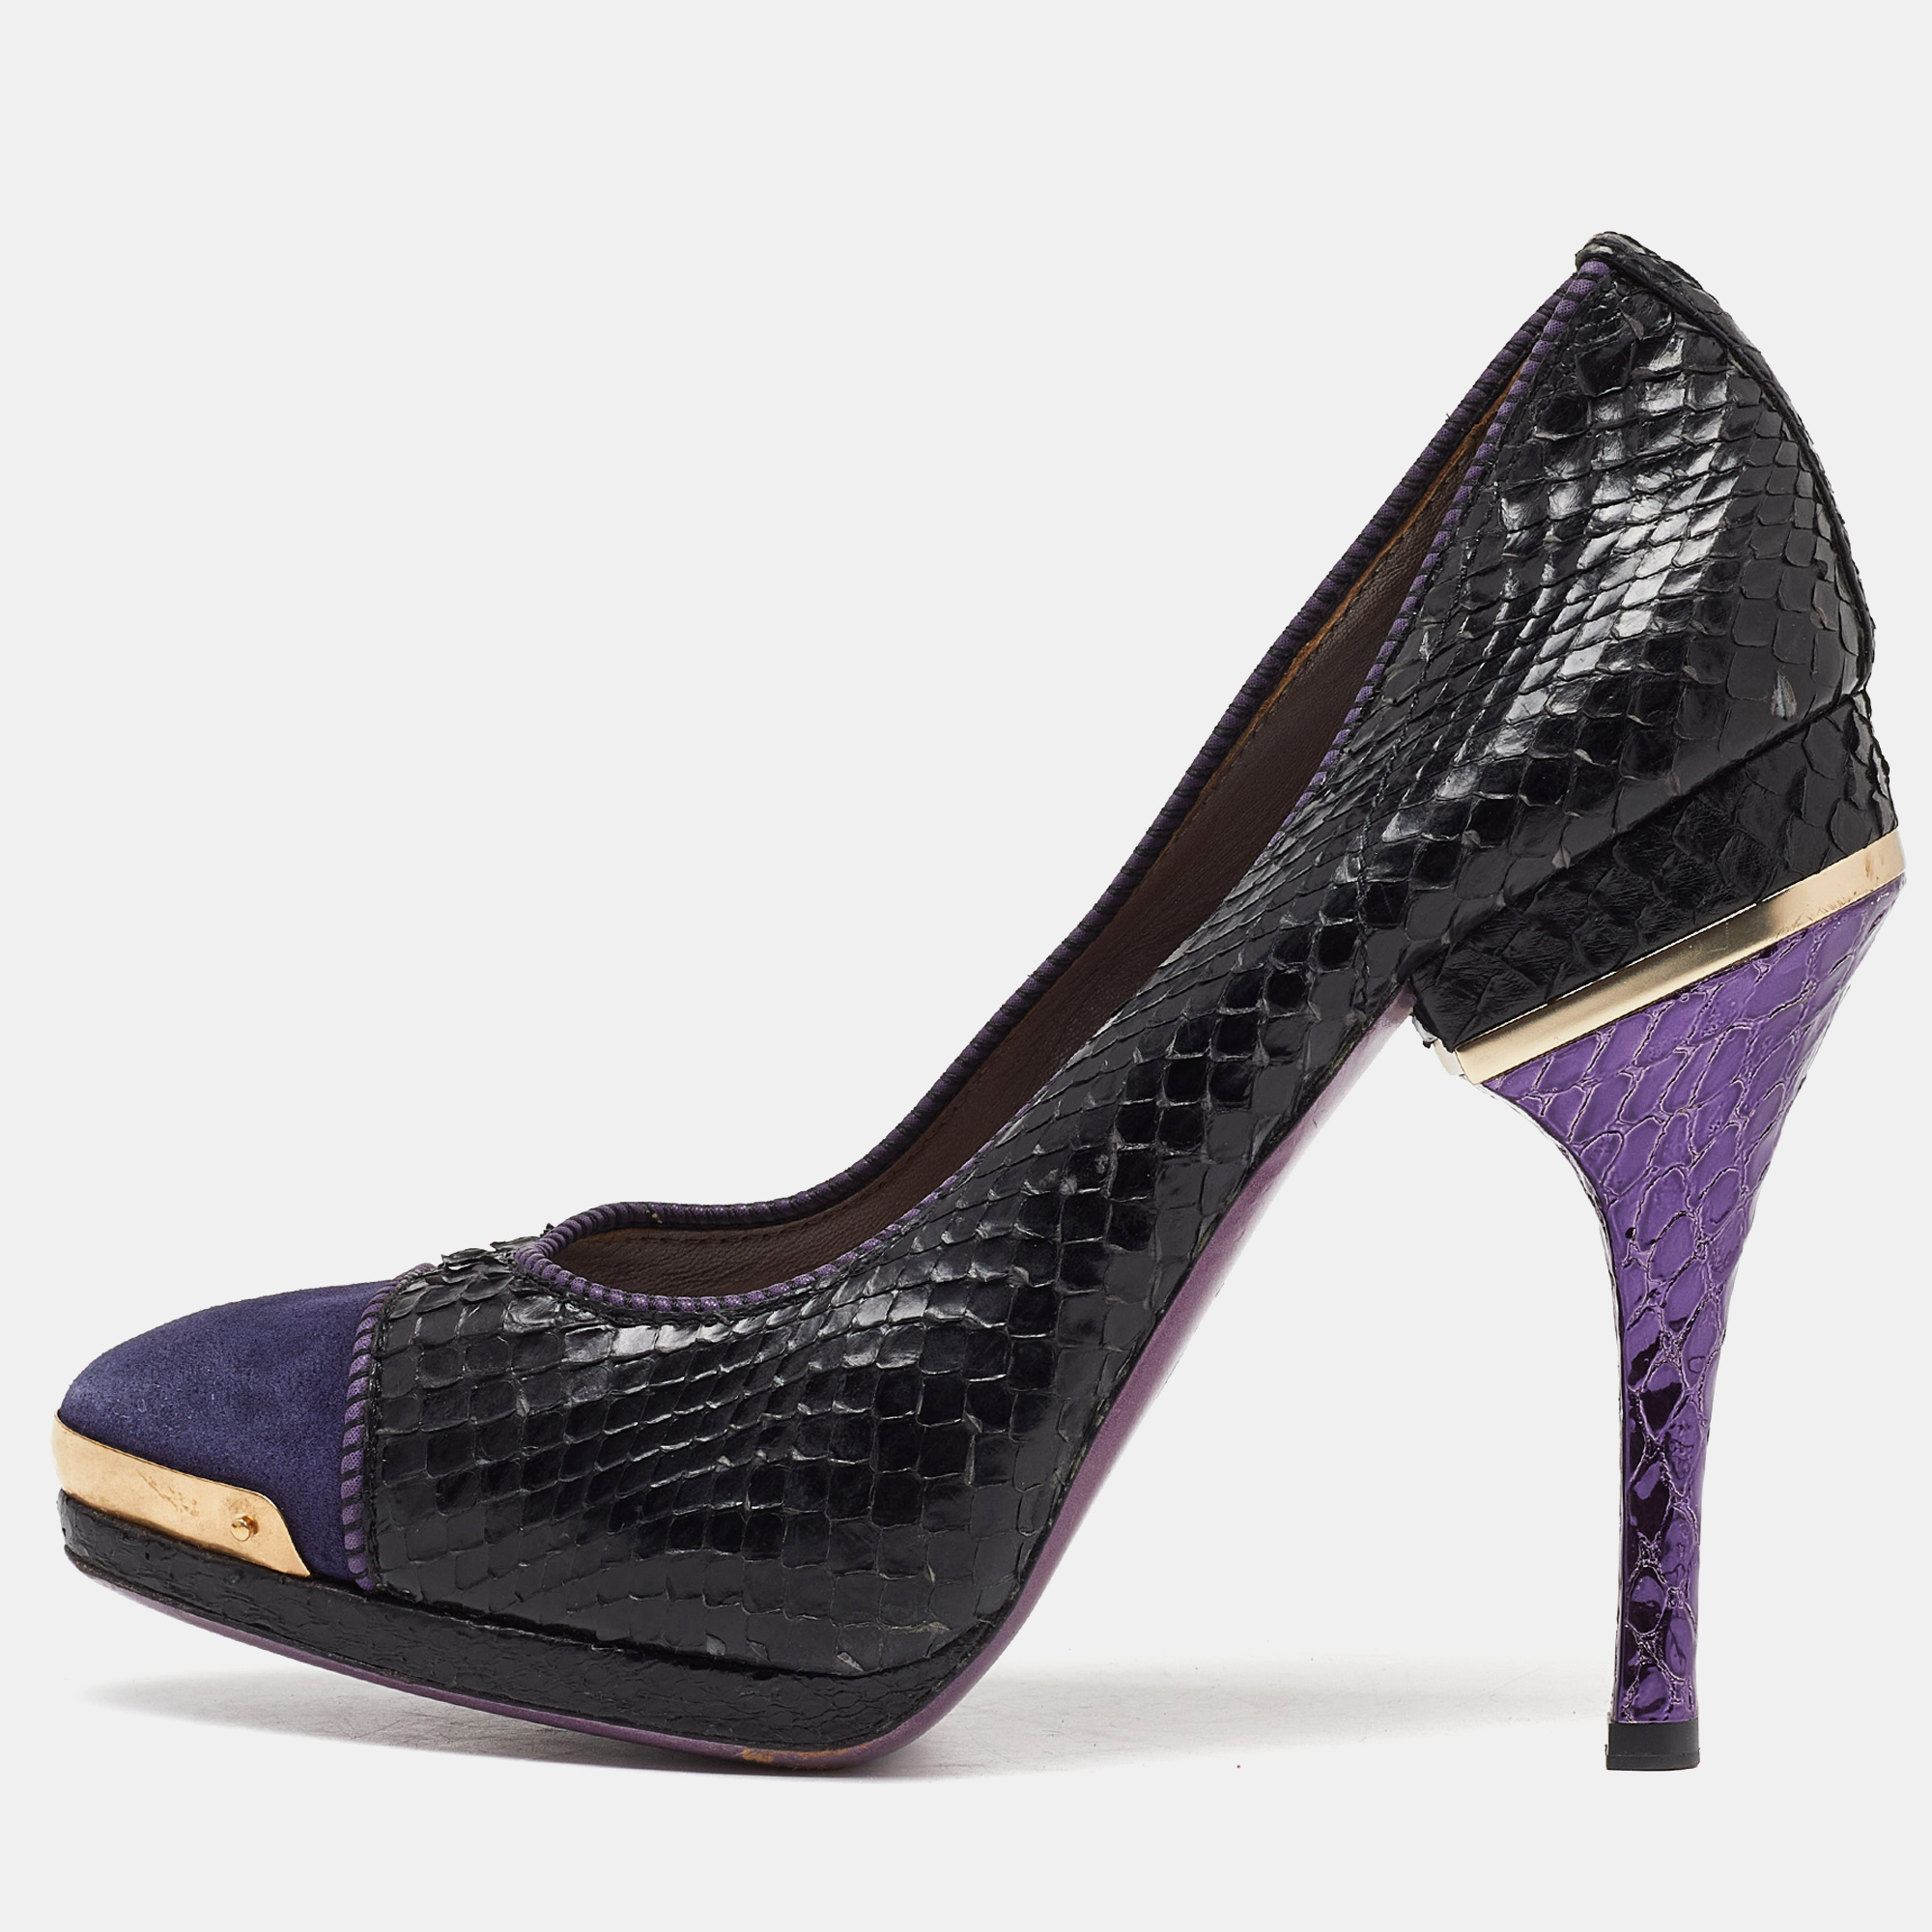 Versace black/purple python and suede pumps size 38